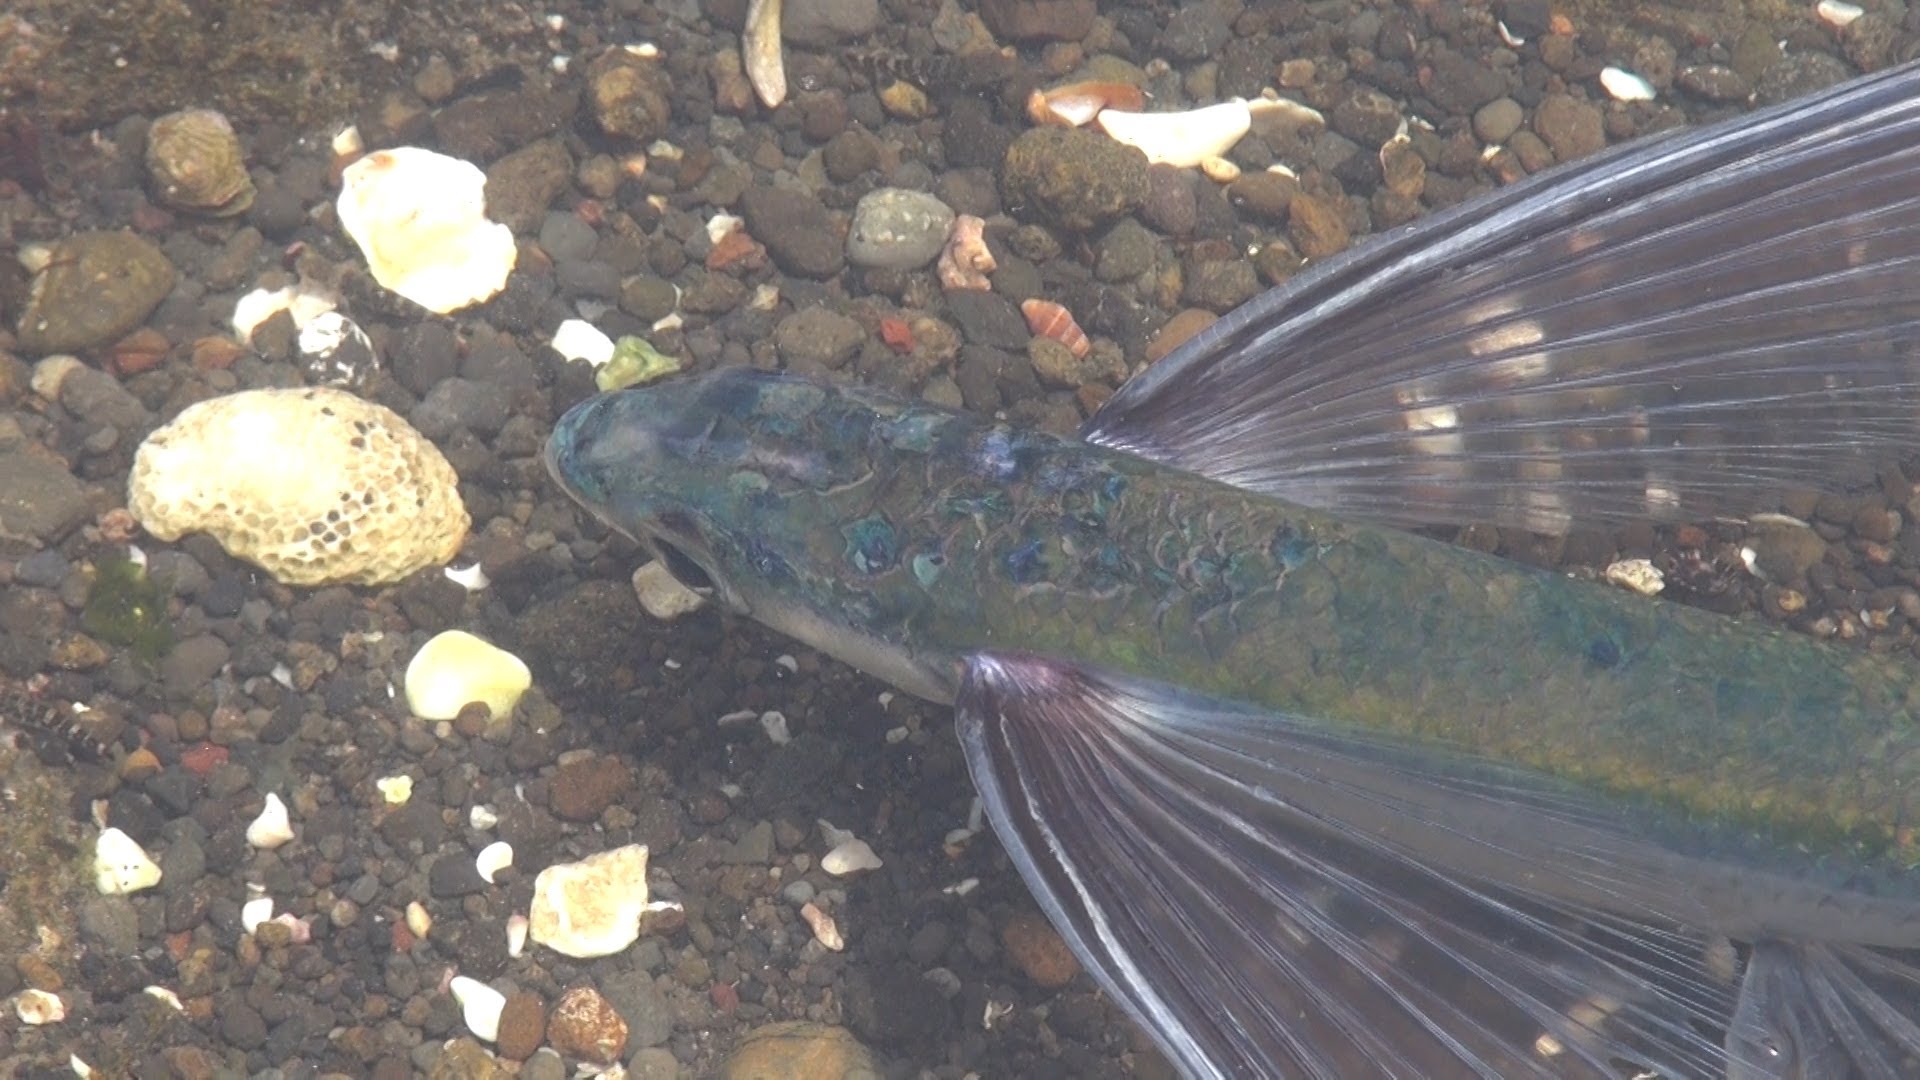 Finding world's saddest flying fish trapped in a small tide pool at Miura, Kanagawa, Japan